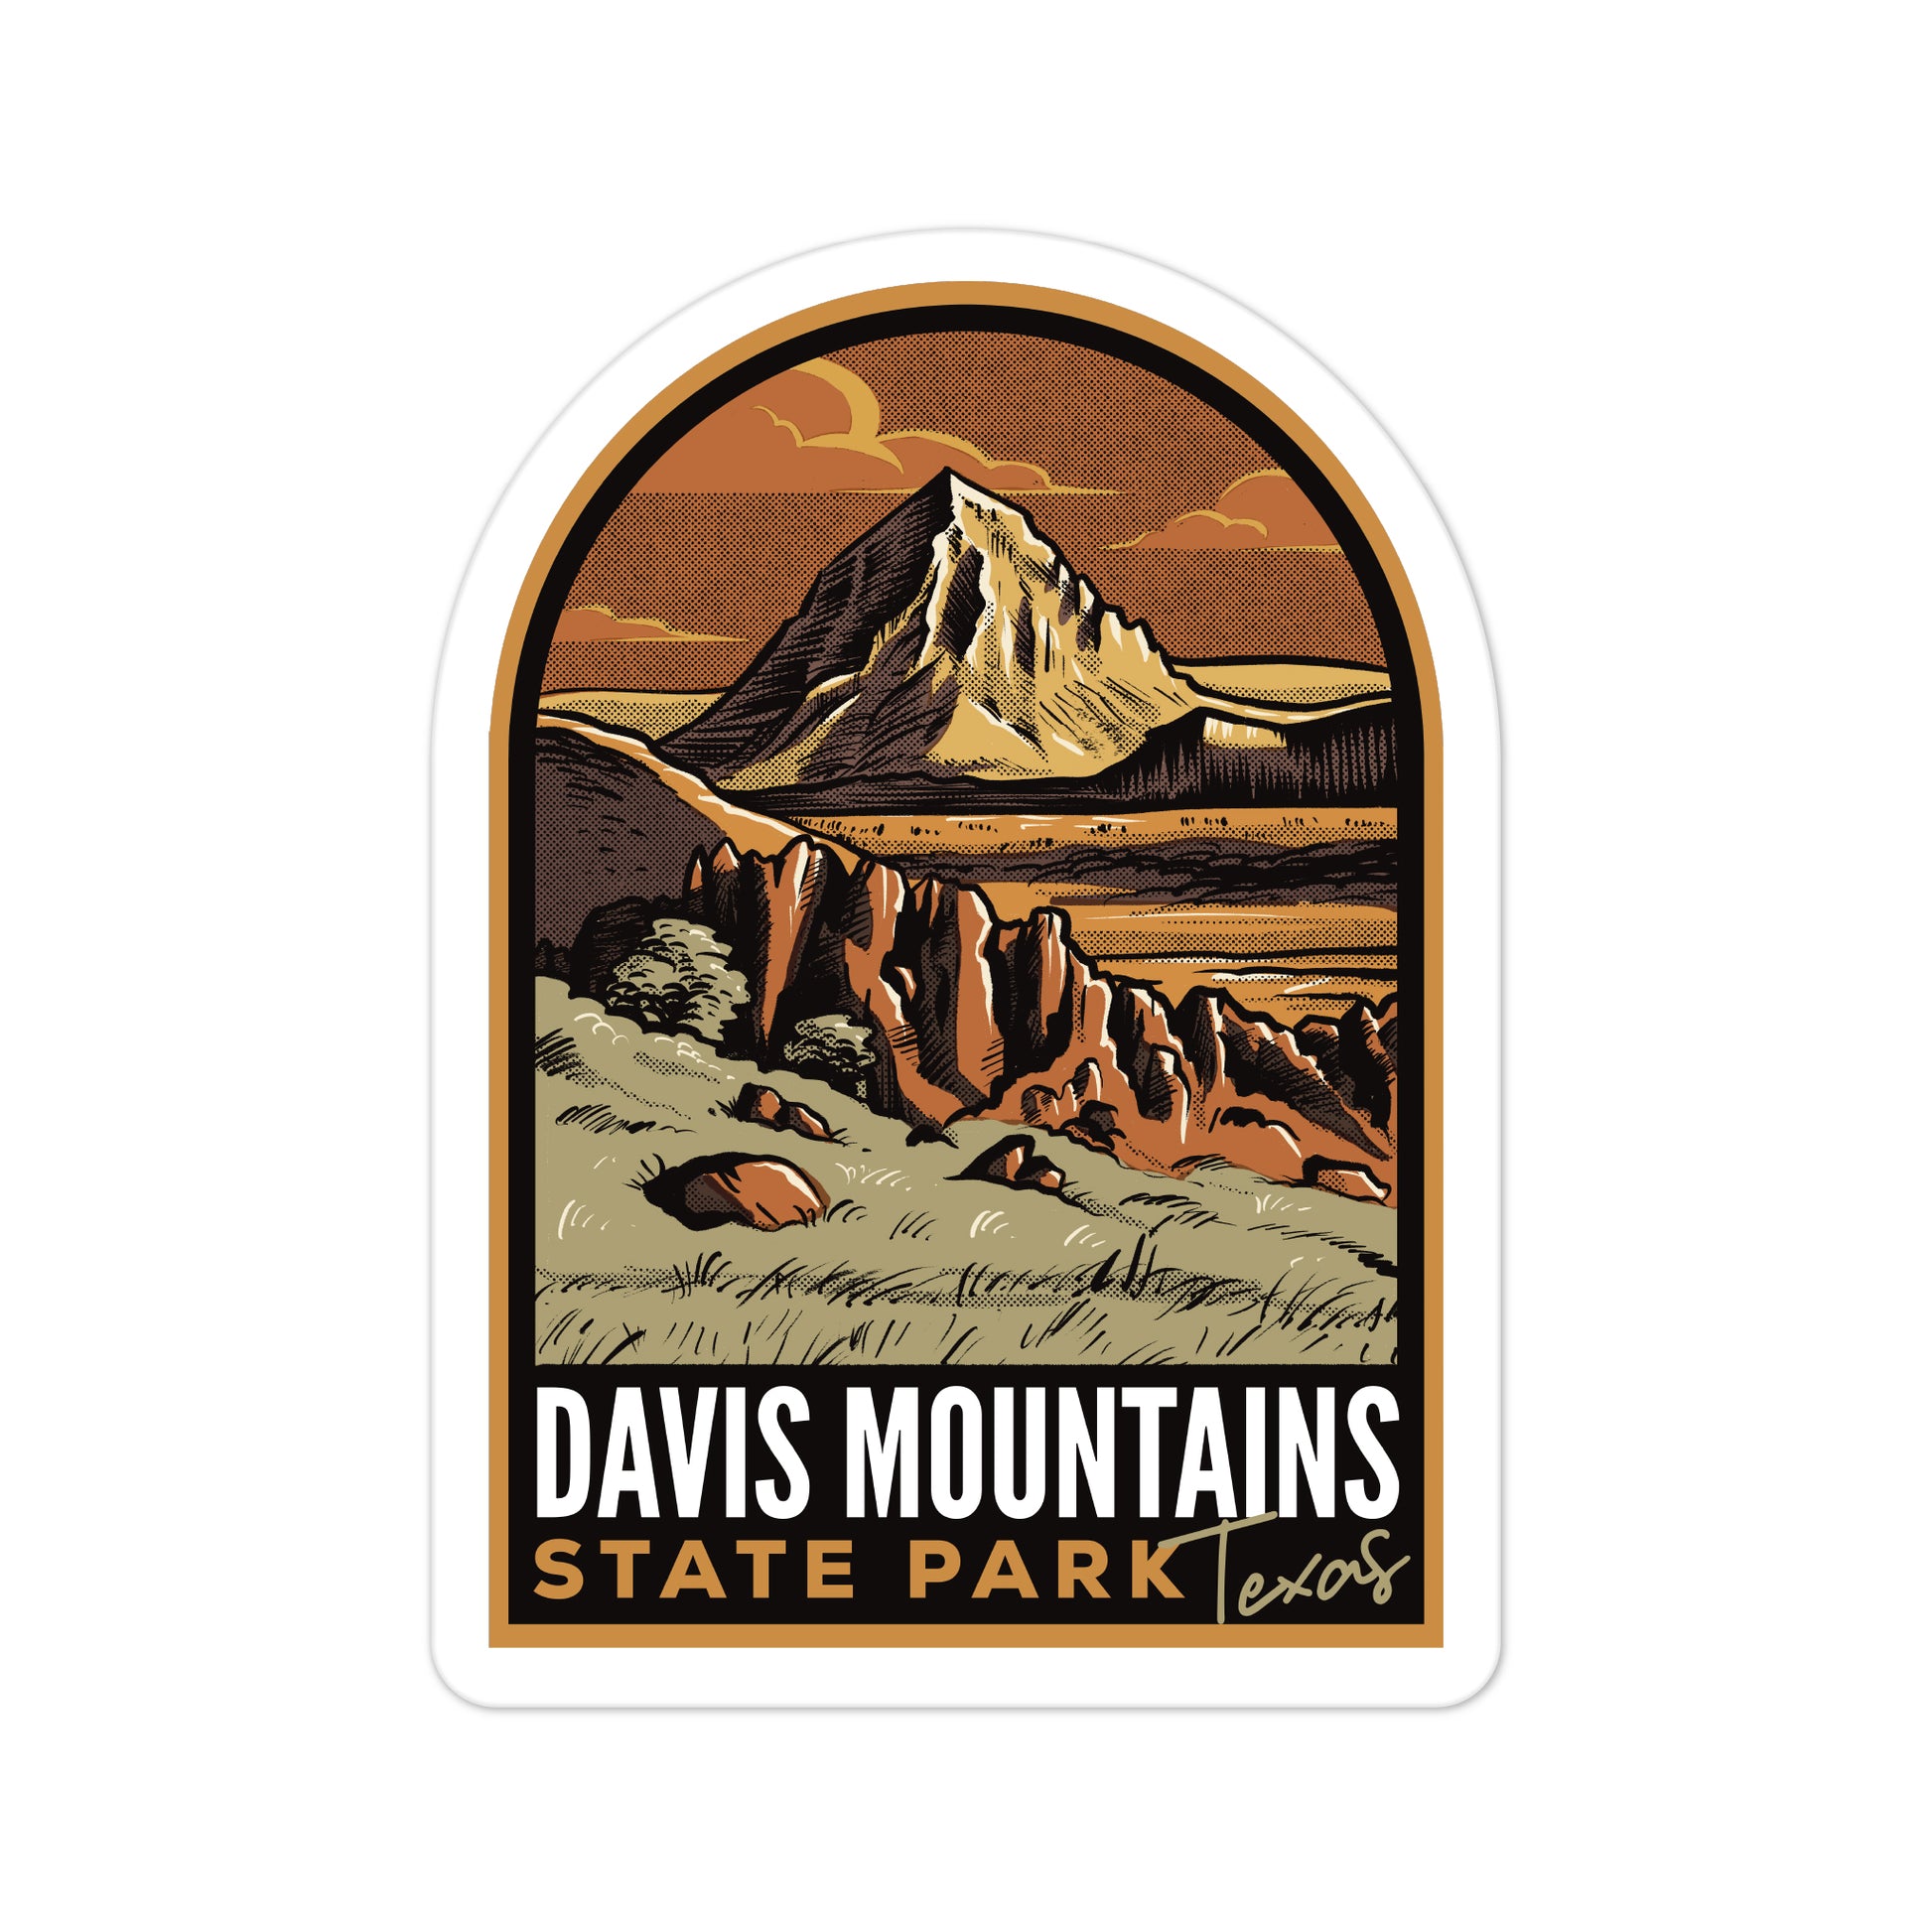 A sticker of Davis Mountains State Park